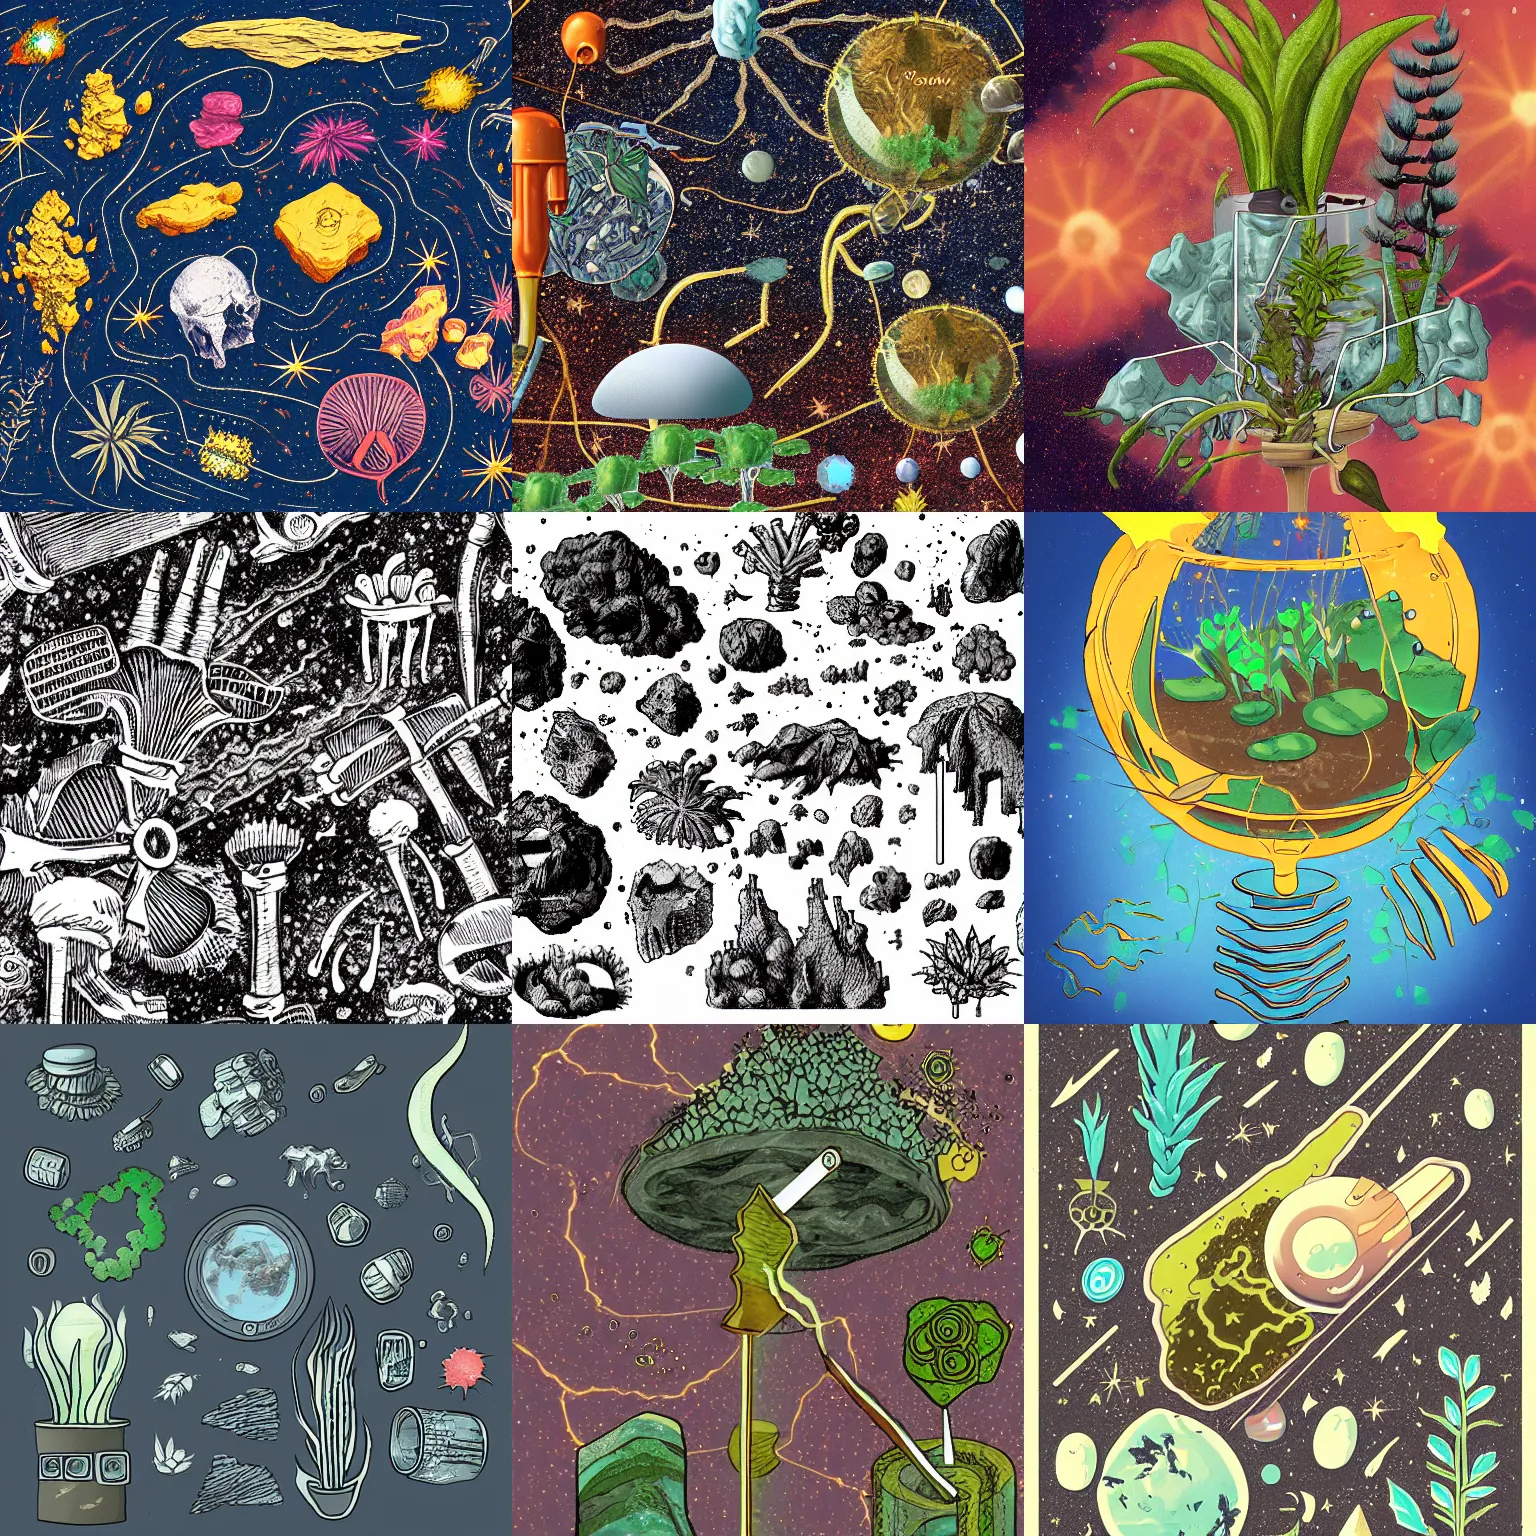 Prompt: plants, minerals, bones, sparks, floating in the vacuum, artist rendition, detalles, grainy